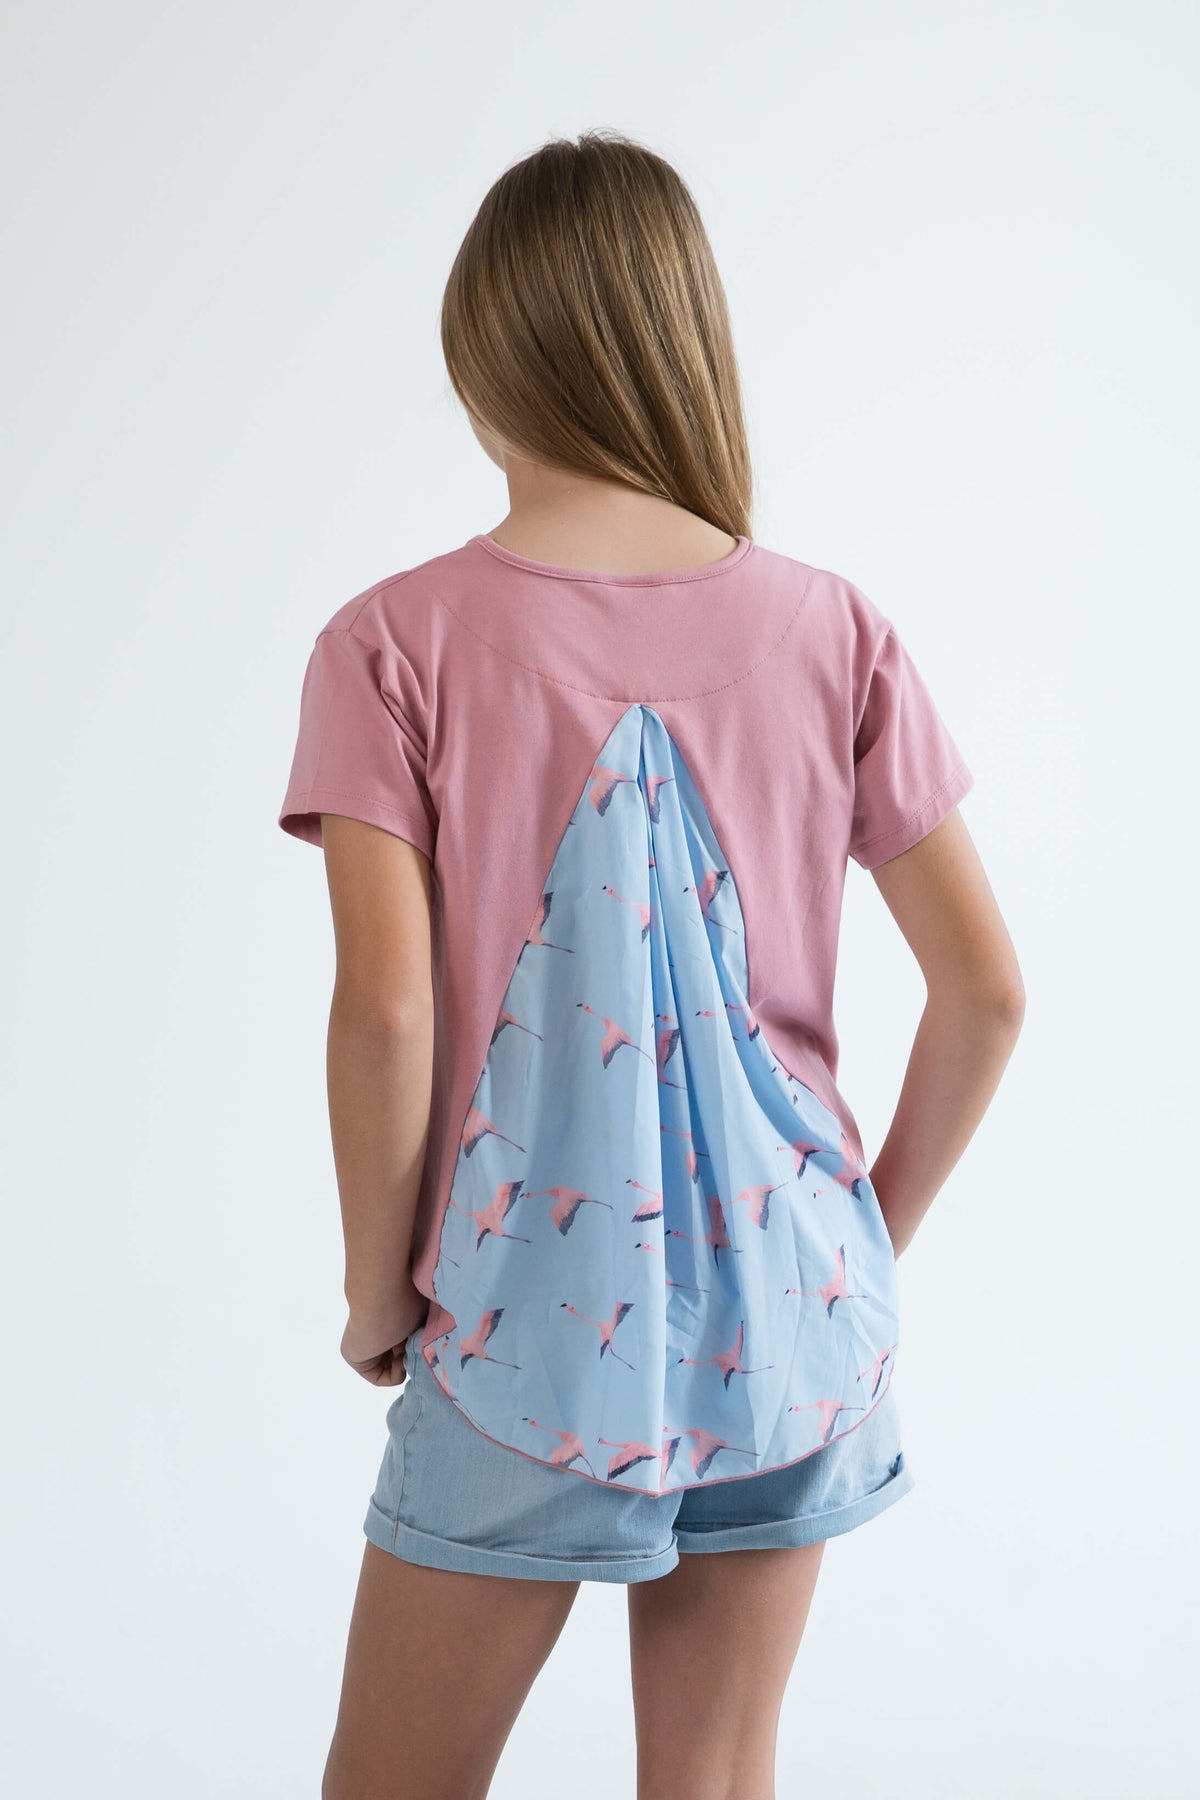 pink teen girls clothing short sleeve t-shirt top flamingo print by Love Haidee Australia back